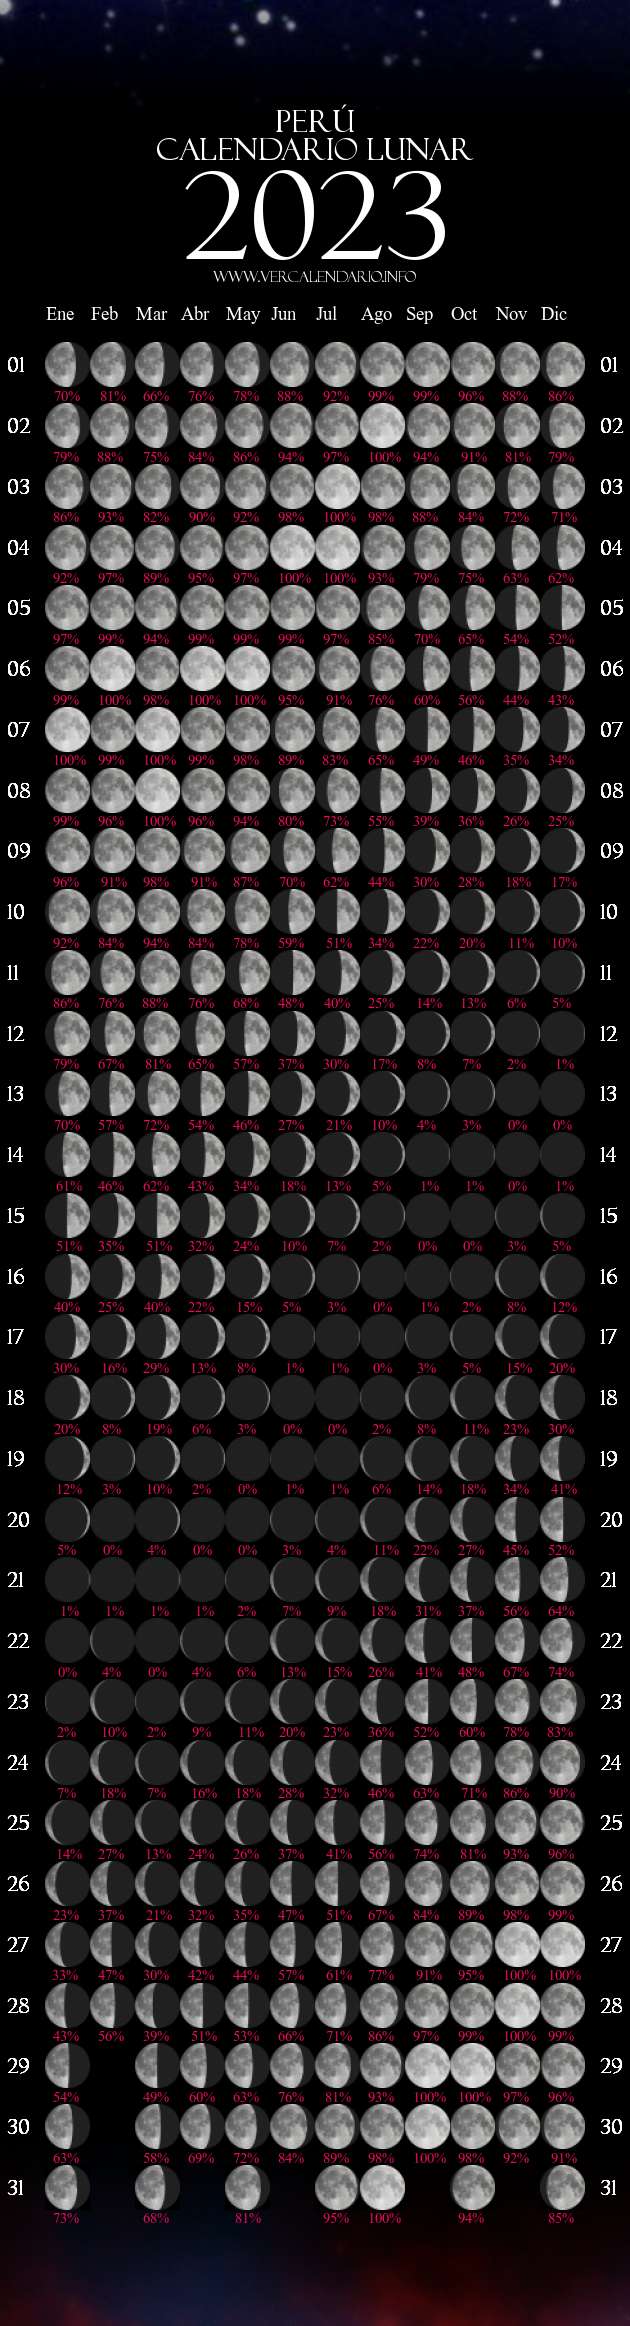 Calendario Lunar Septiembre Easy To Use Calendar App